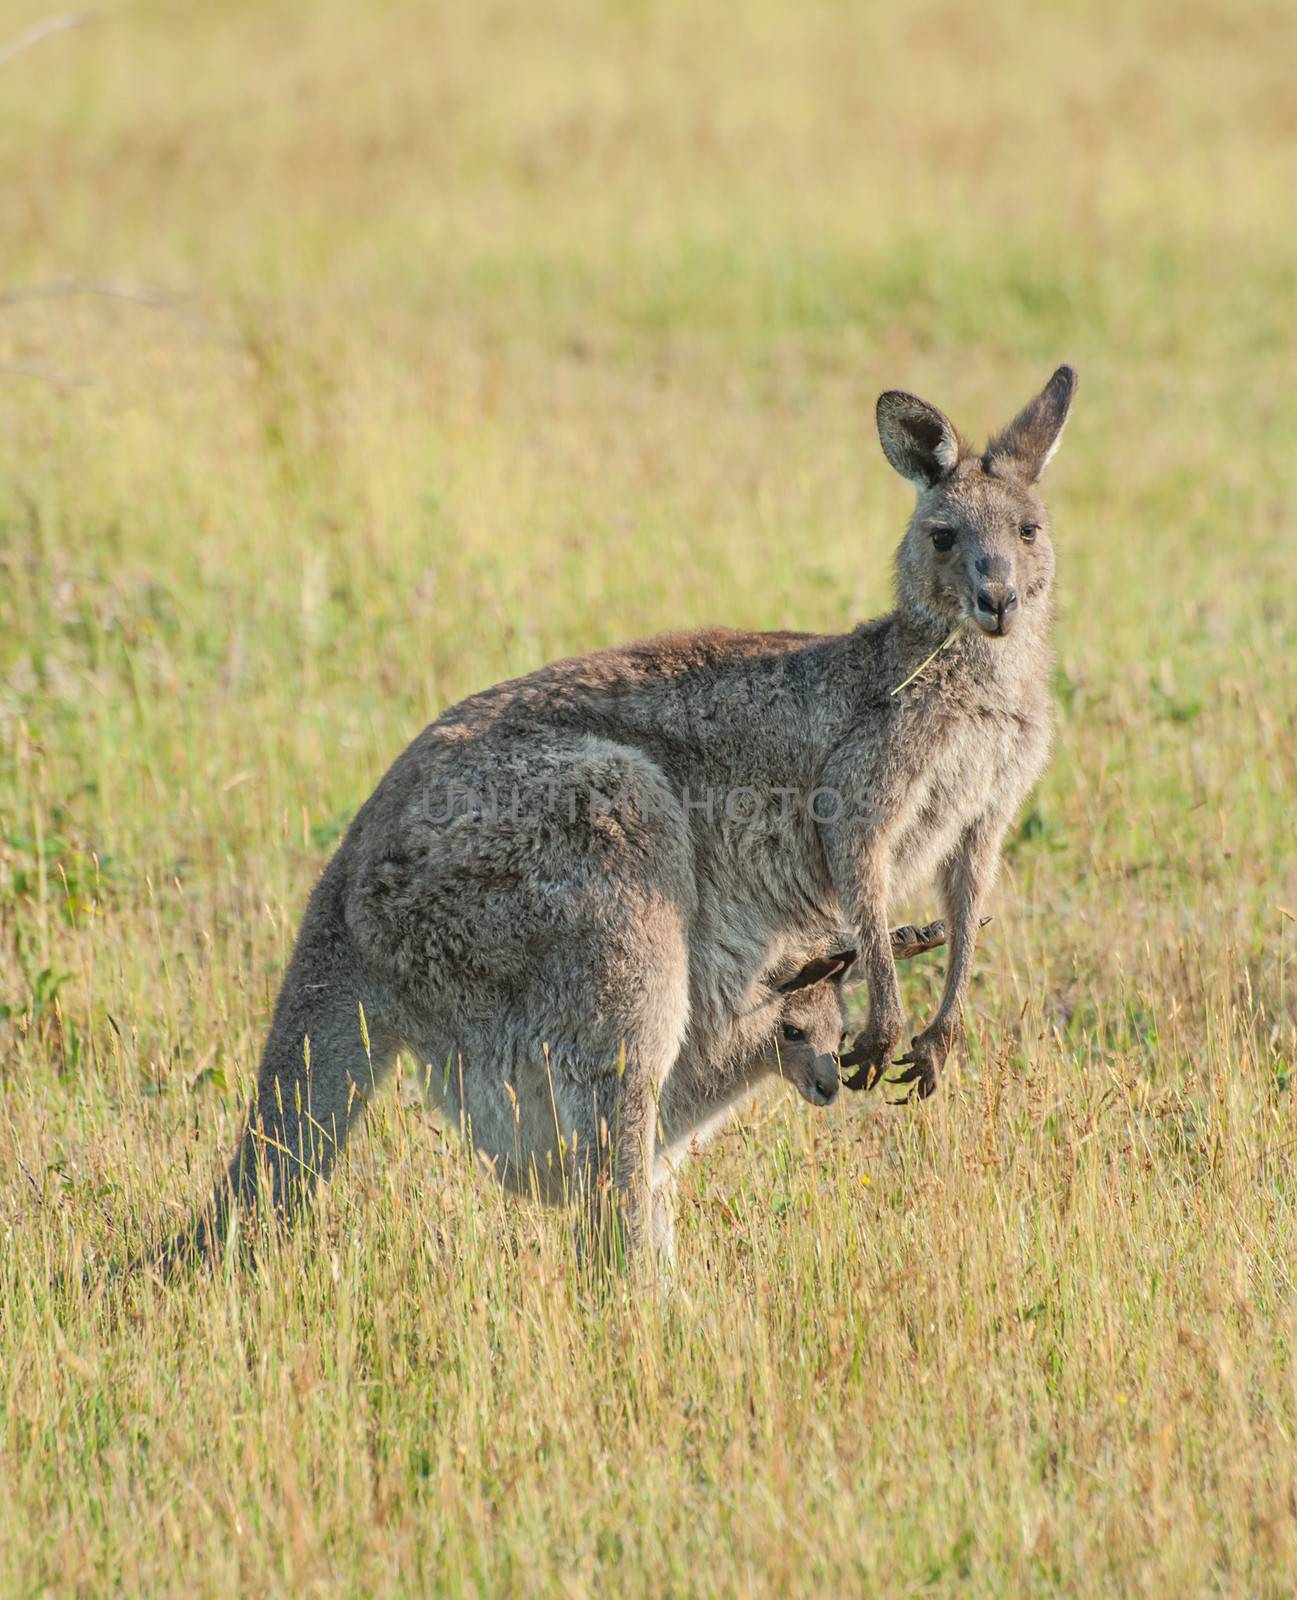 Kangaroo by fyletto